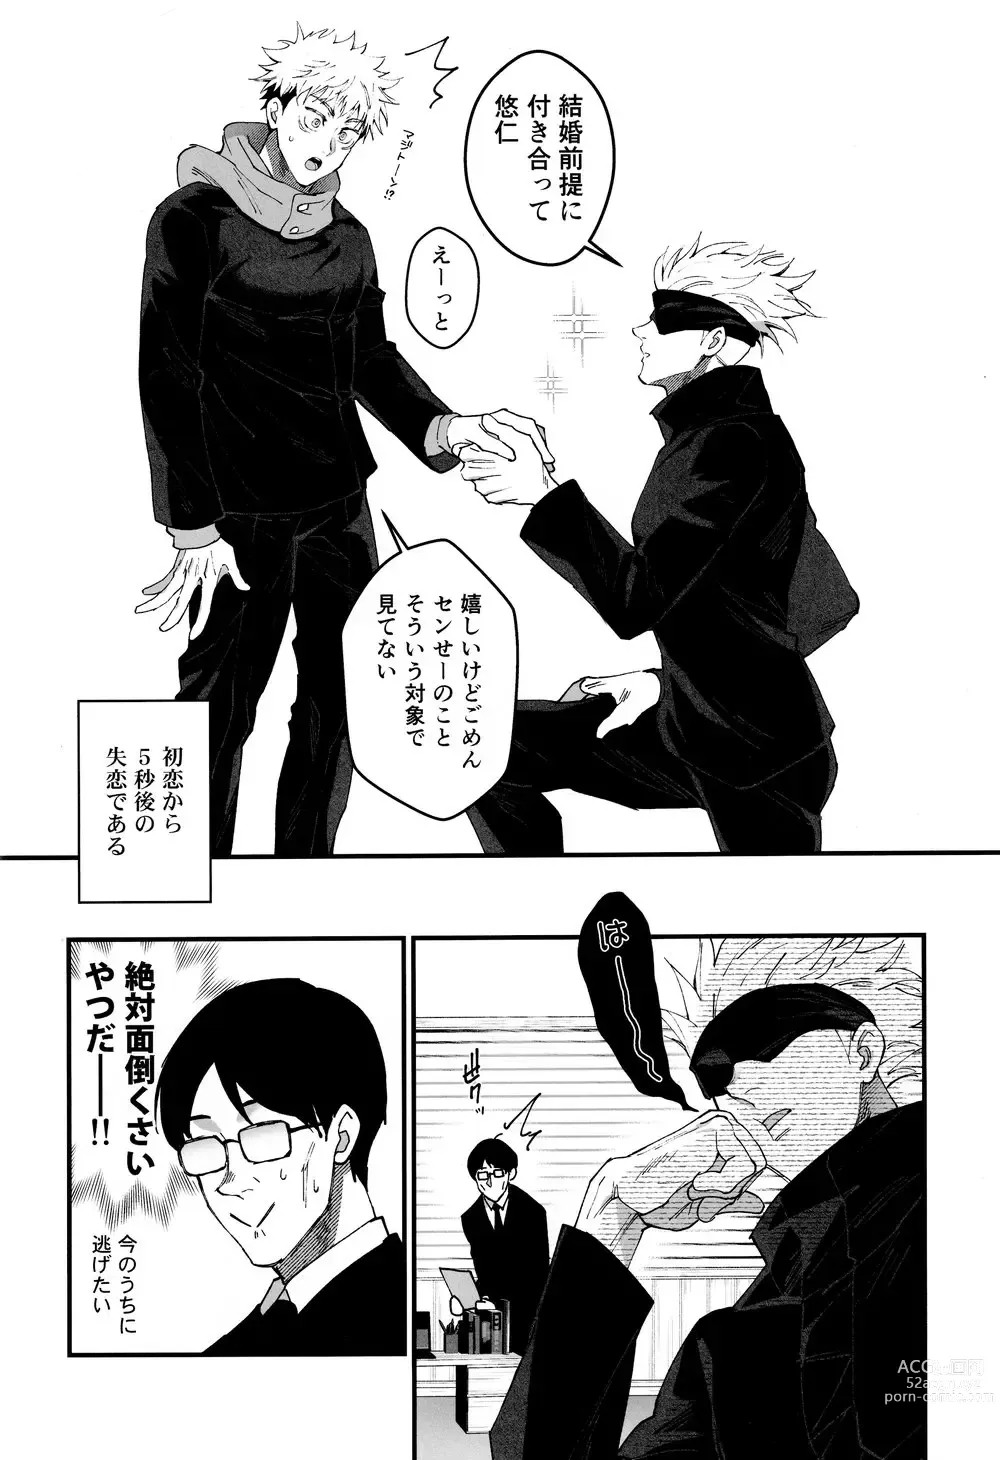 Page 6 of doujinshi Gachikoi Monster